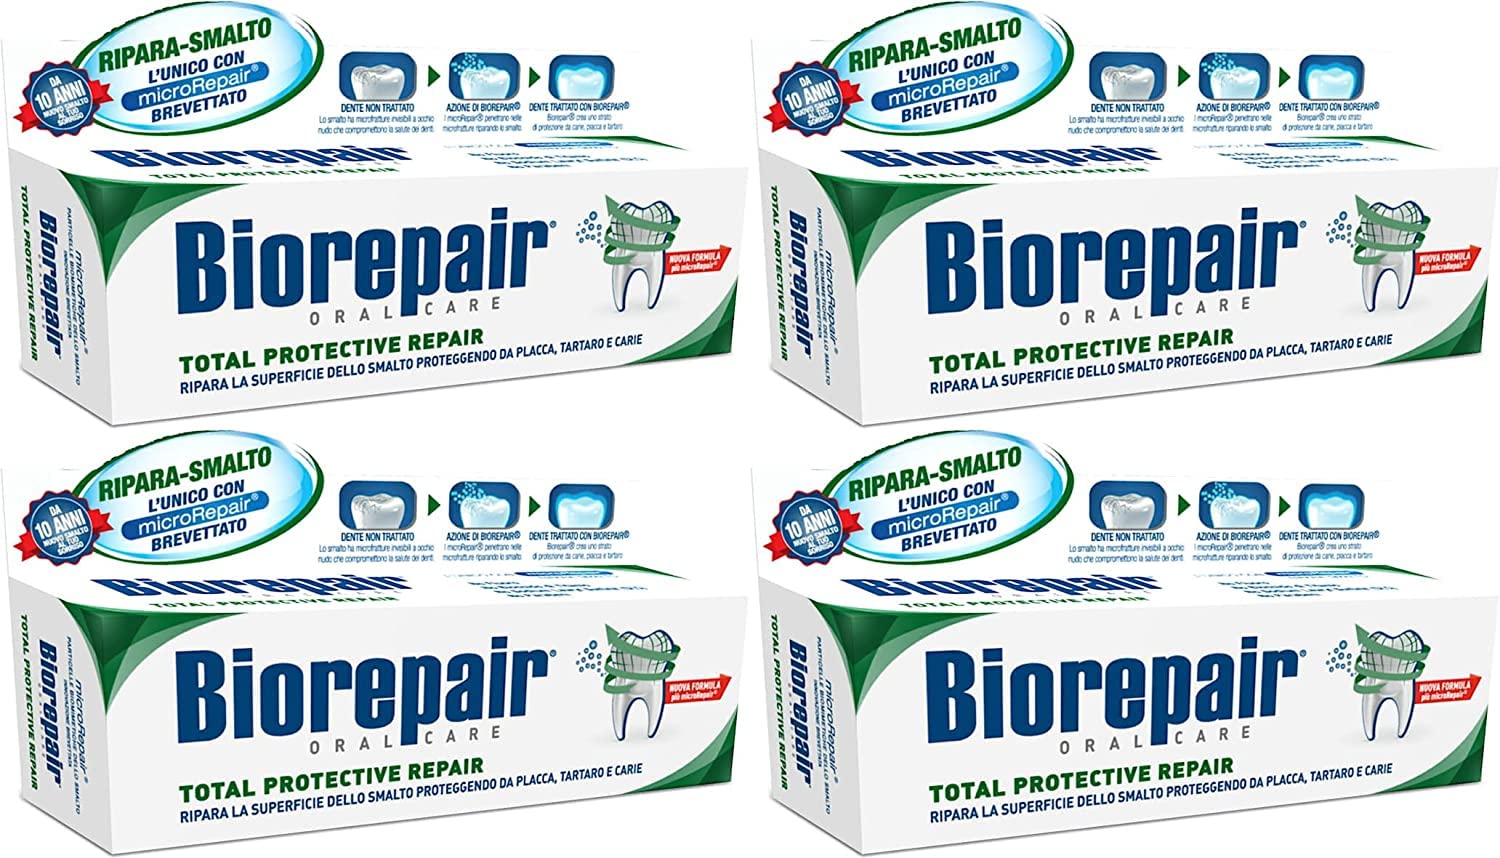 Biorepair: Total Protective Repair Toothpaste with microRepair New Formula  - 2.5 Fluid Ounce (75ml) Tubes (Pack of